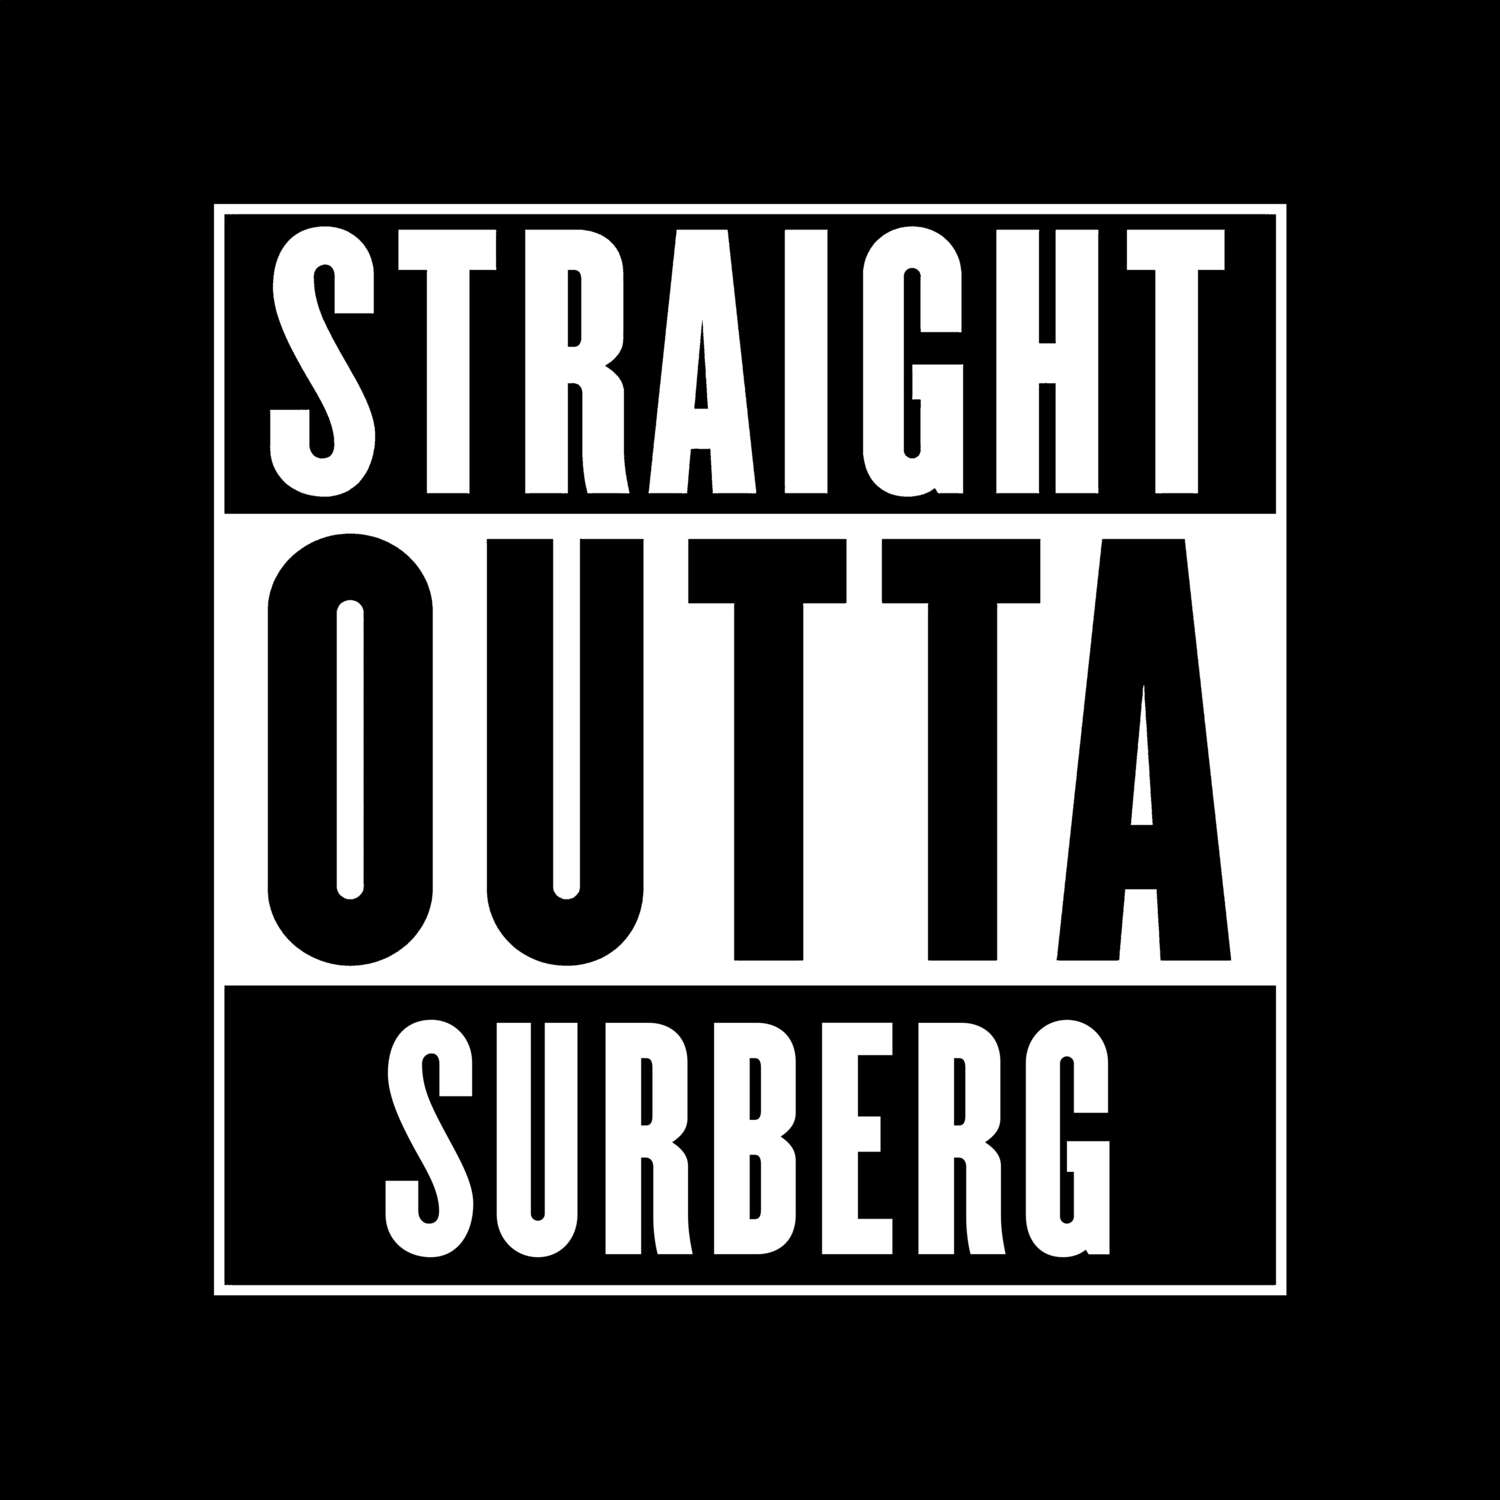 Surberg T-Shirt »Straight Outta«